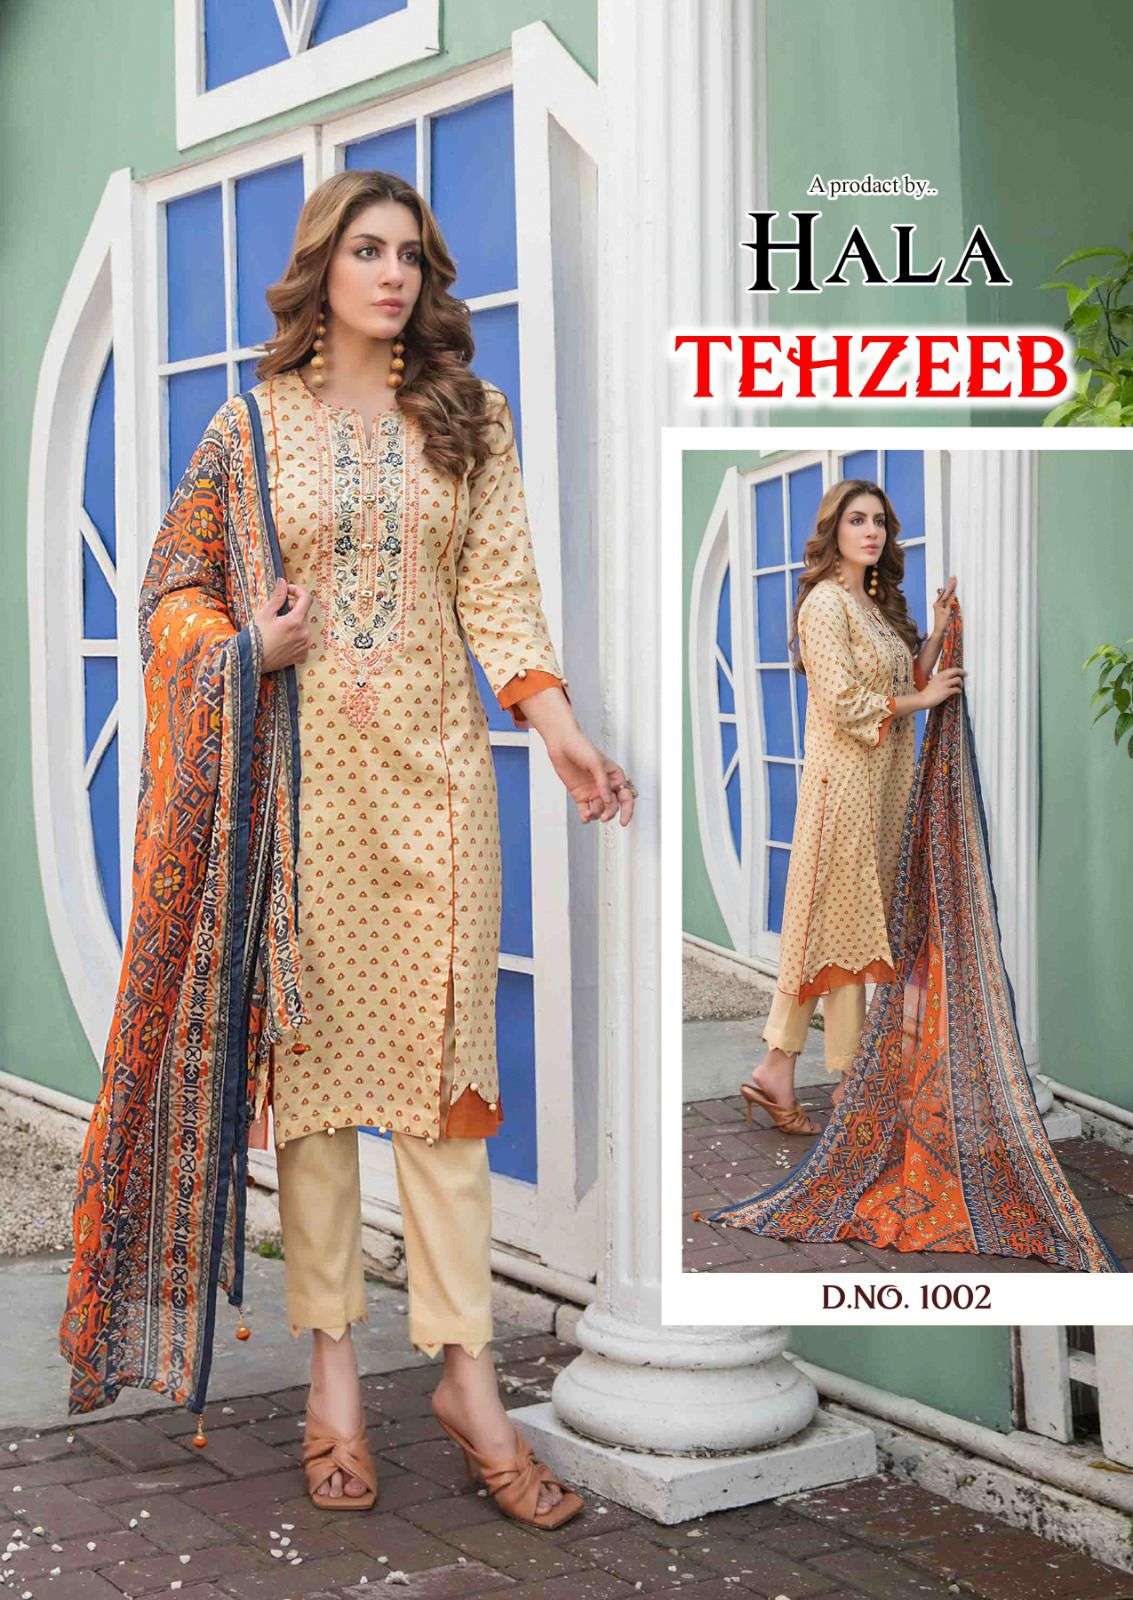 tehzeeb by hala 1001-1006 series pure cambric cotton pakistani salwar kameez wholesale price 